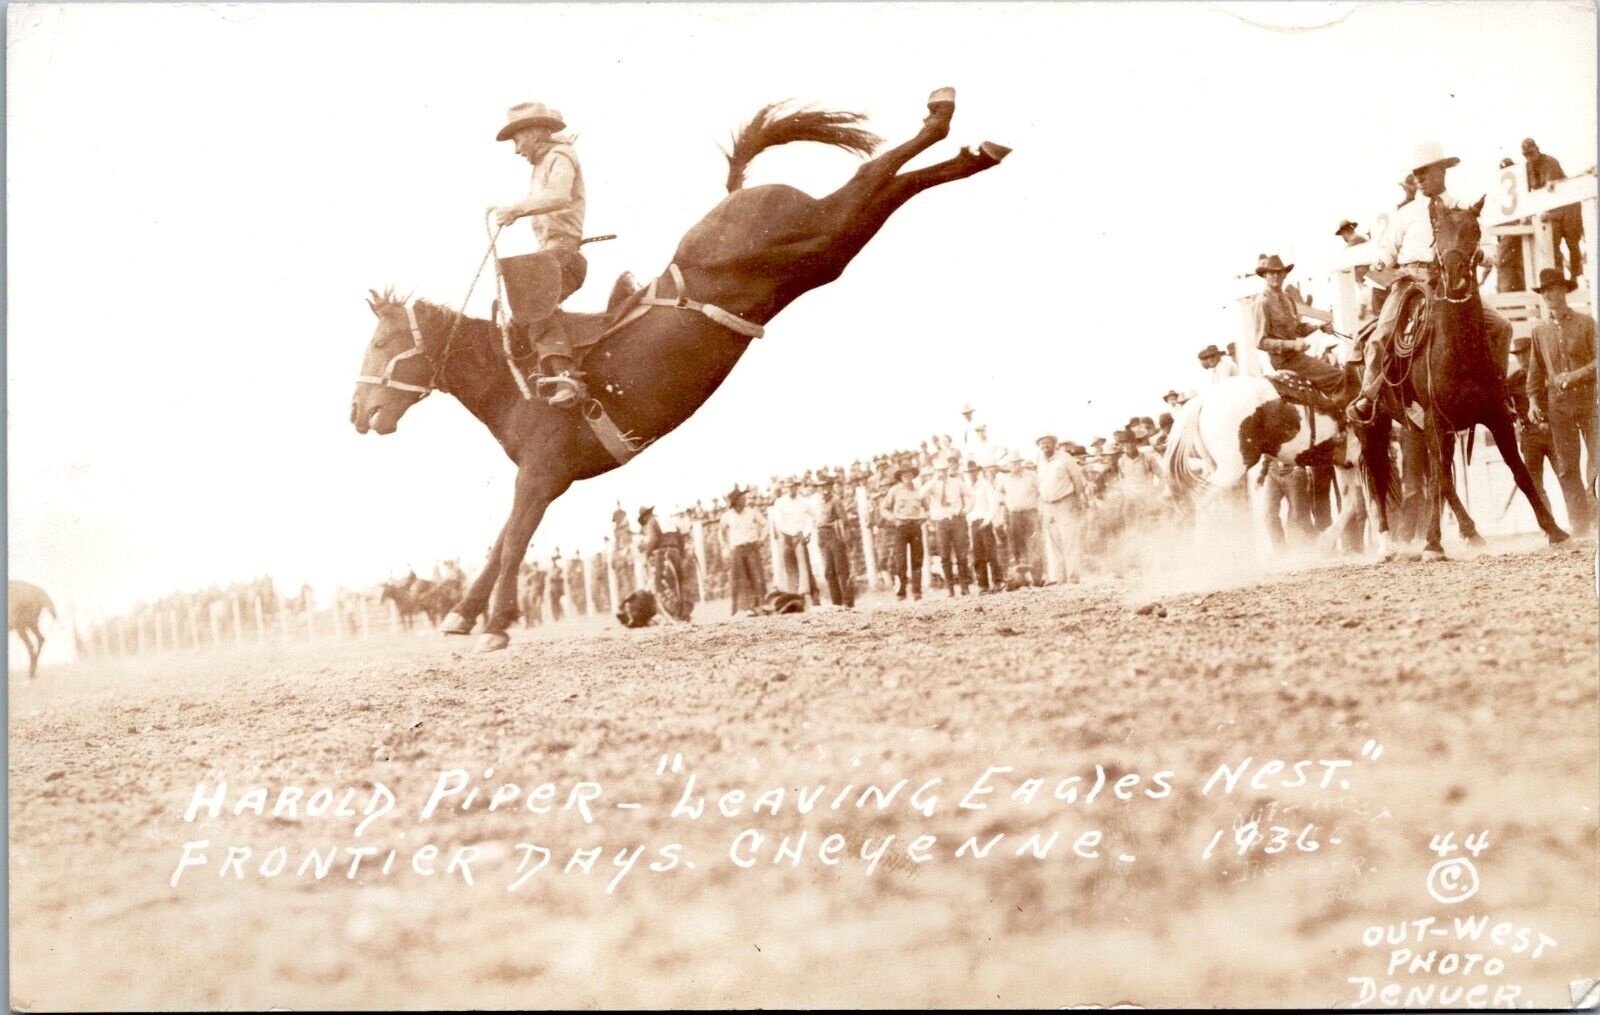 RPPC Cowboy on Bucking Horse, Frontier Days, Cheyenne Wyoming - 1936 Postcard